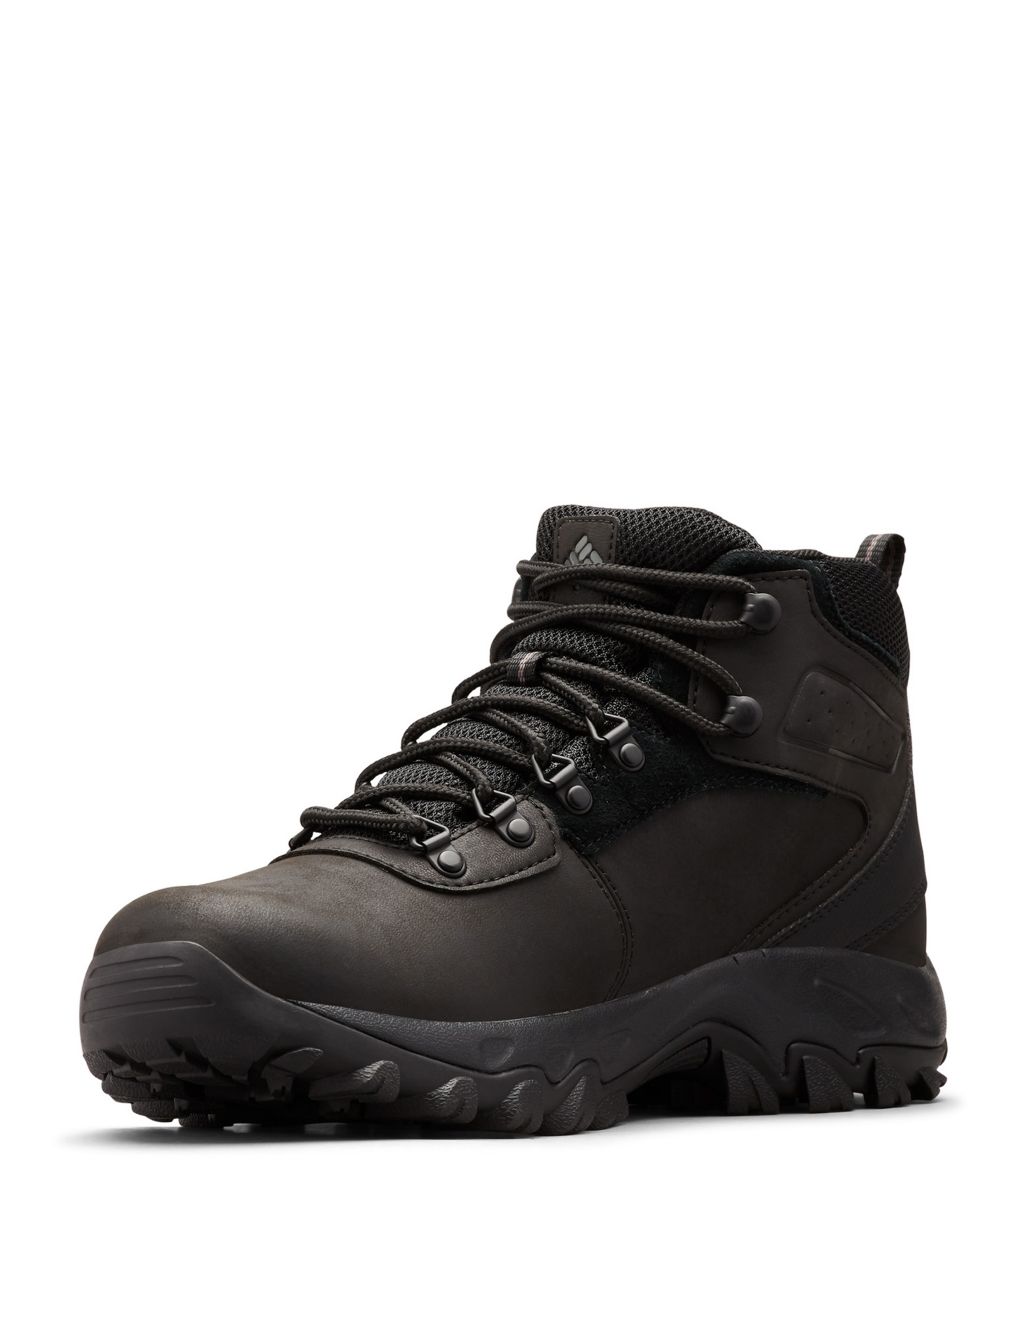 Newton Ridge Plus II Waterproof Walking Boots | Columbia | M&S